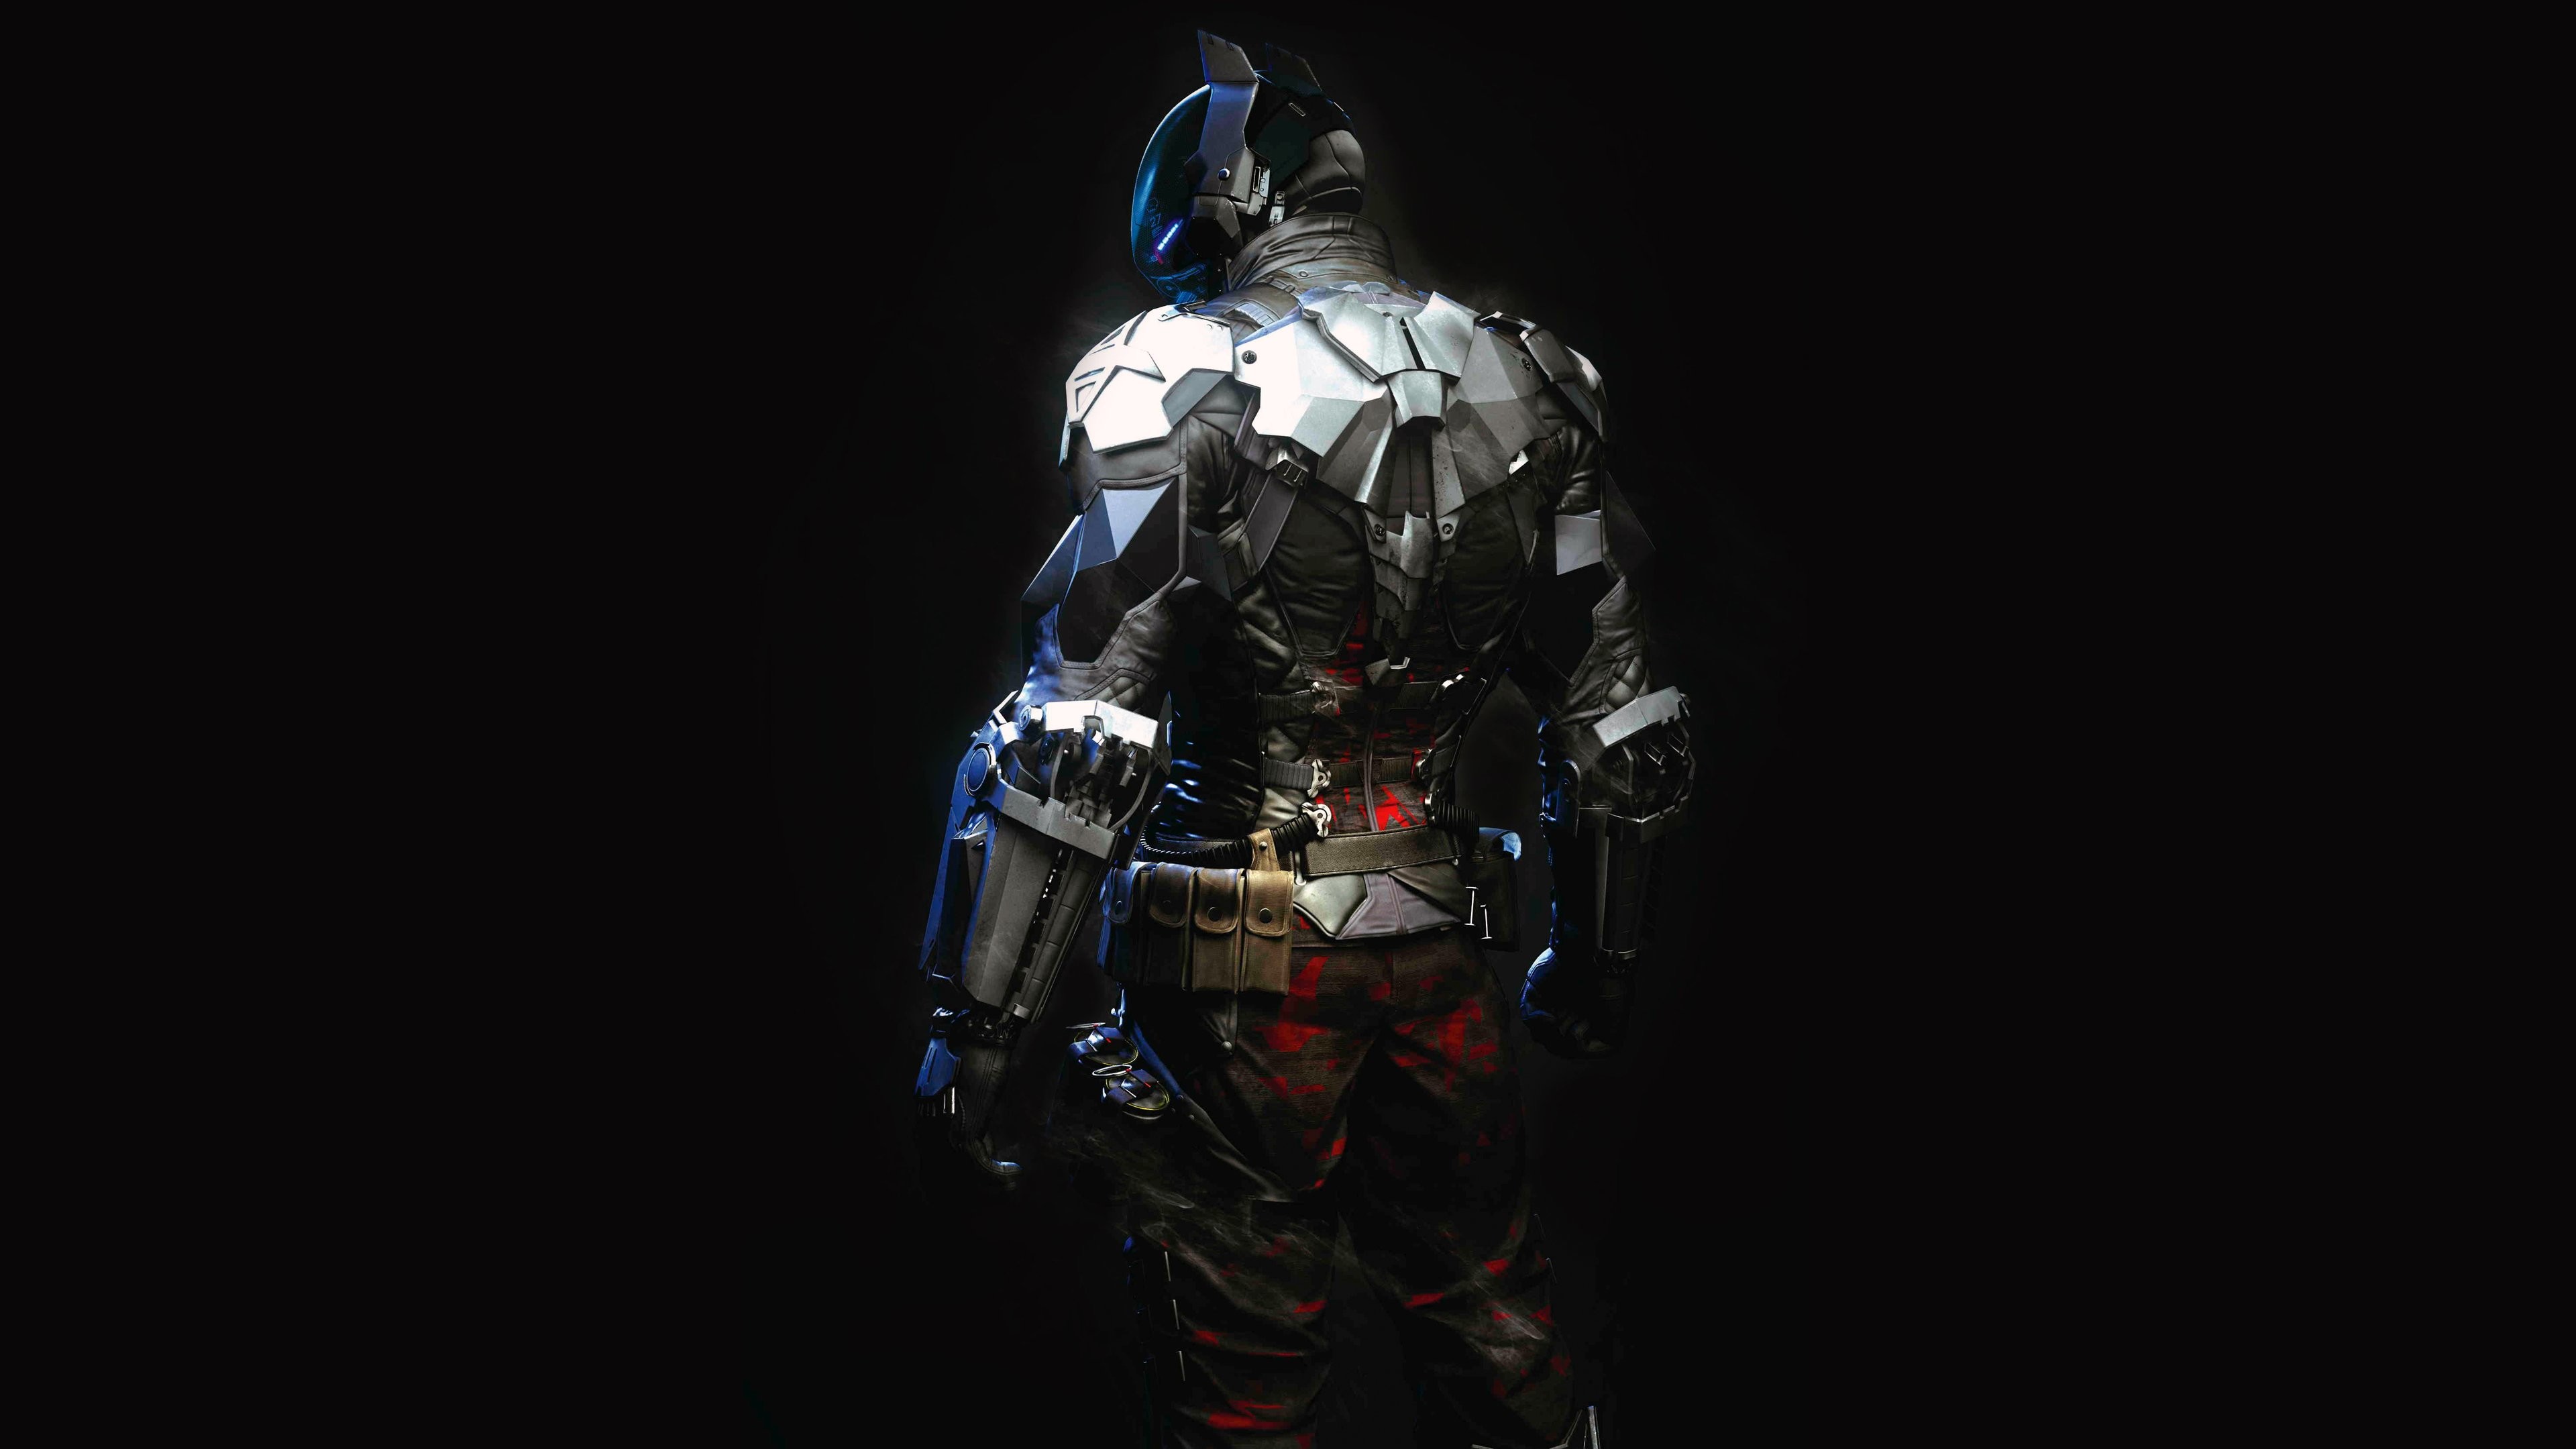 3840x2160 BATMAN ARKHAM KNIGHT superhero dark action adventure fighting shooter  wallpaper |  | 746605 | WallpaperUP